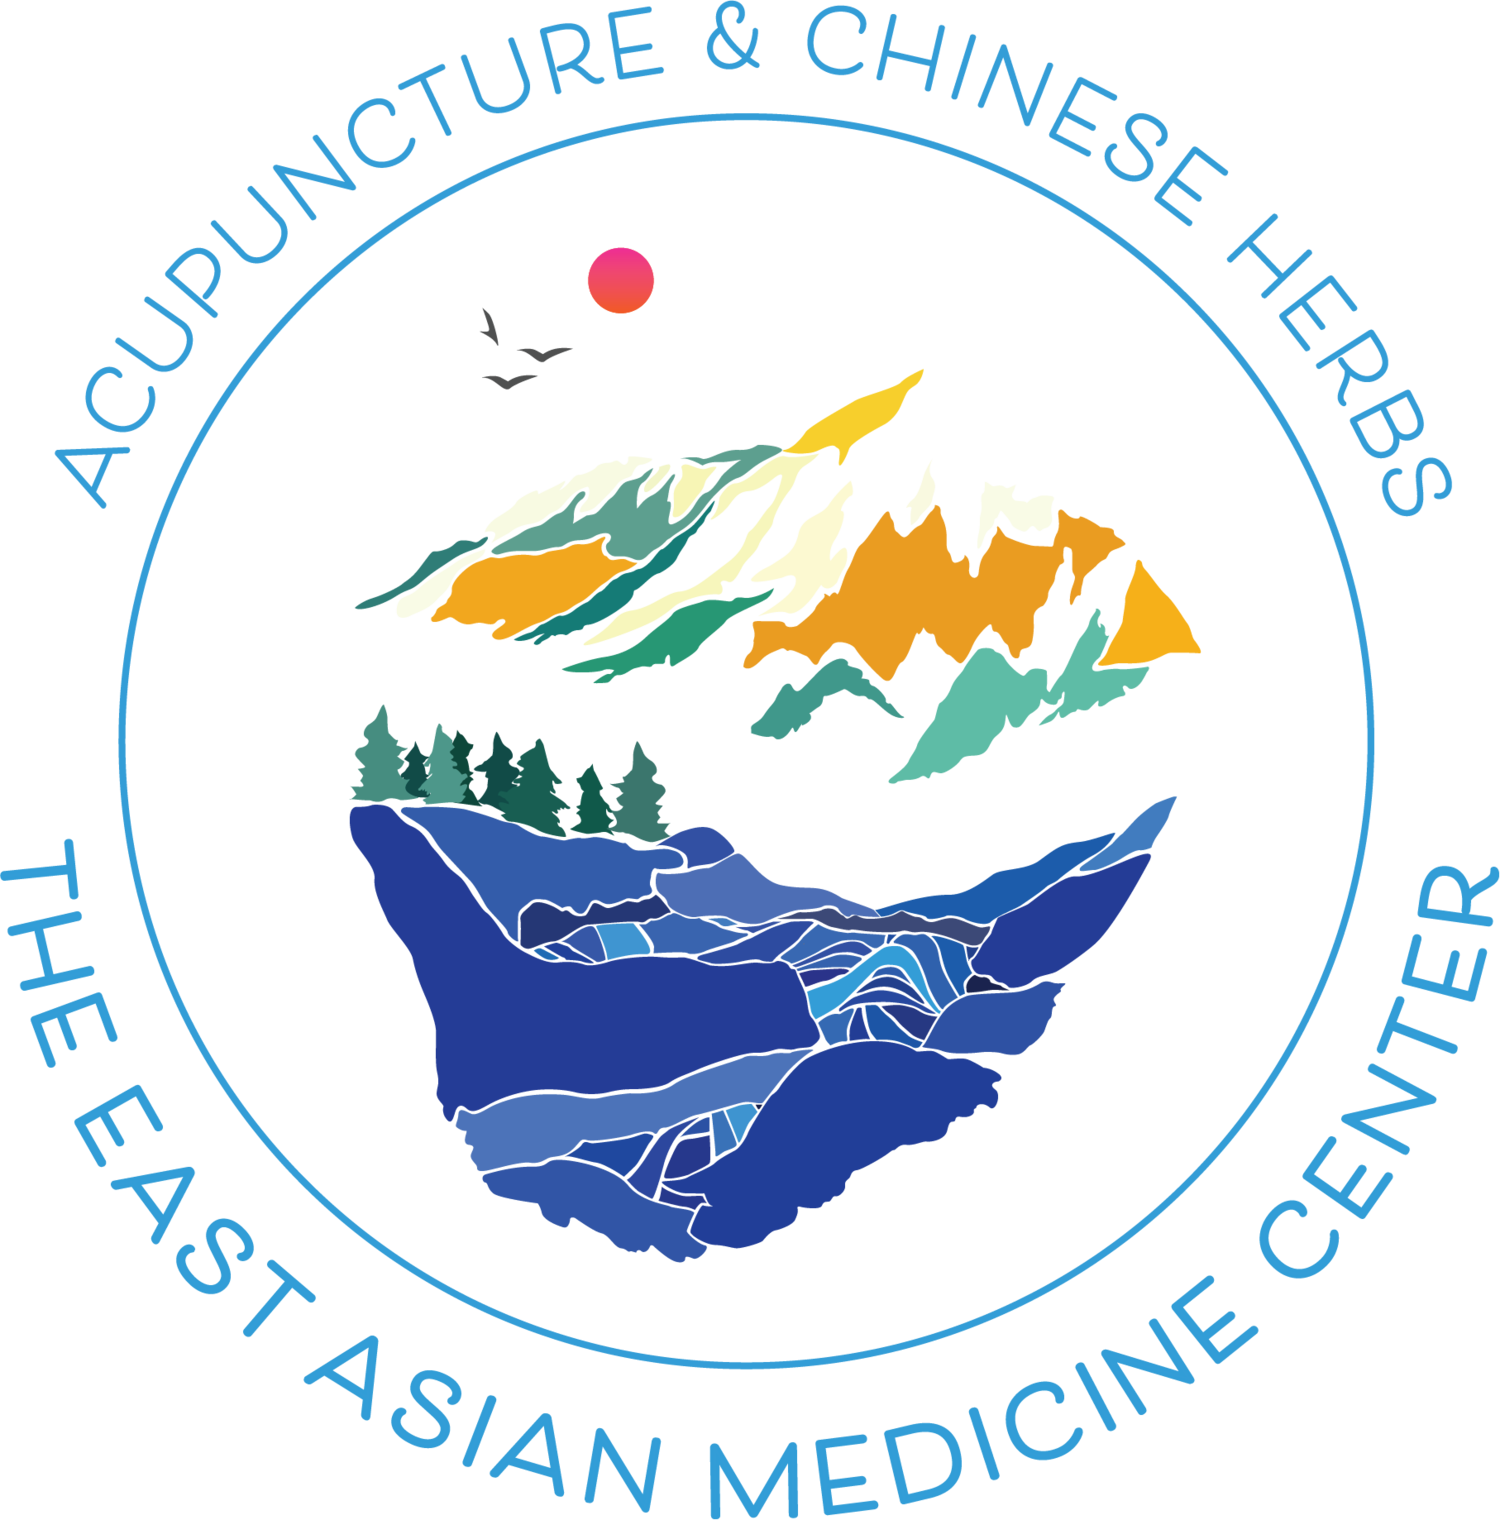 The East Asian Medicine Center